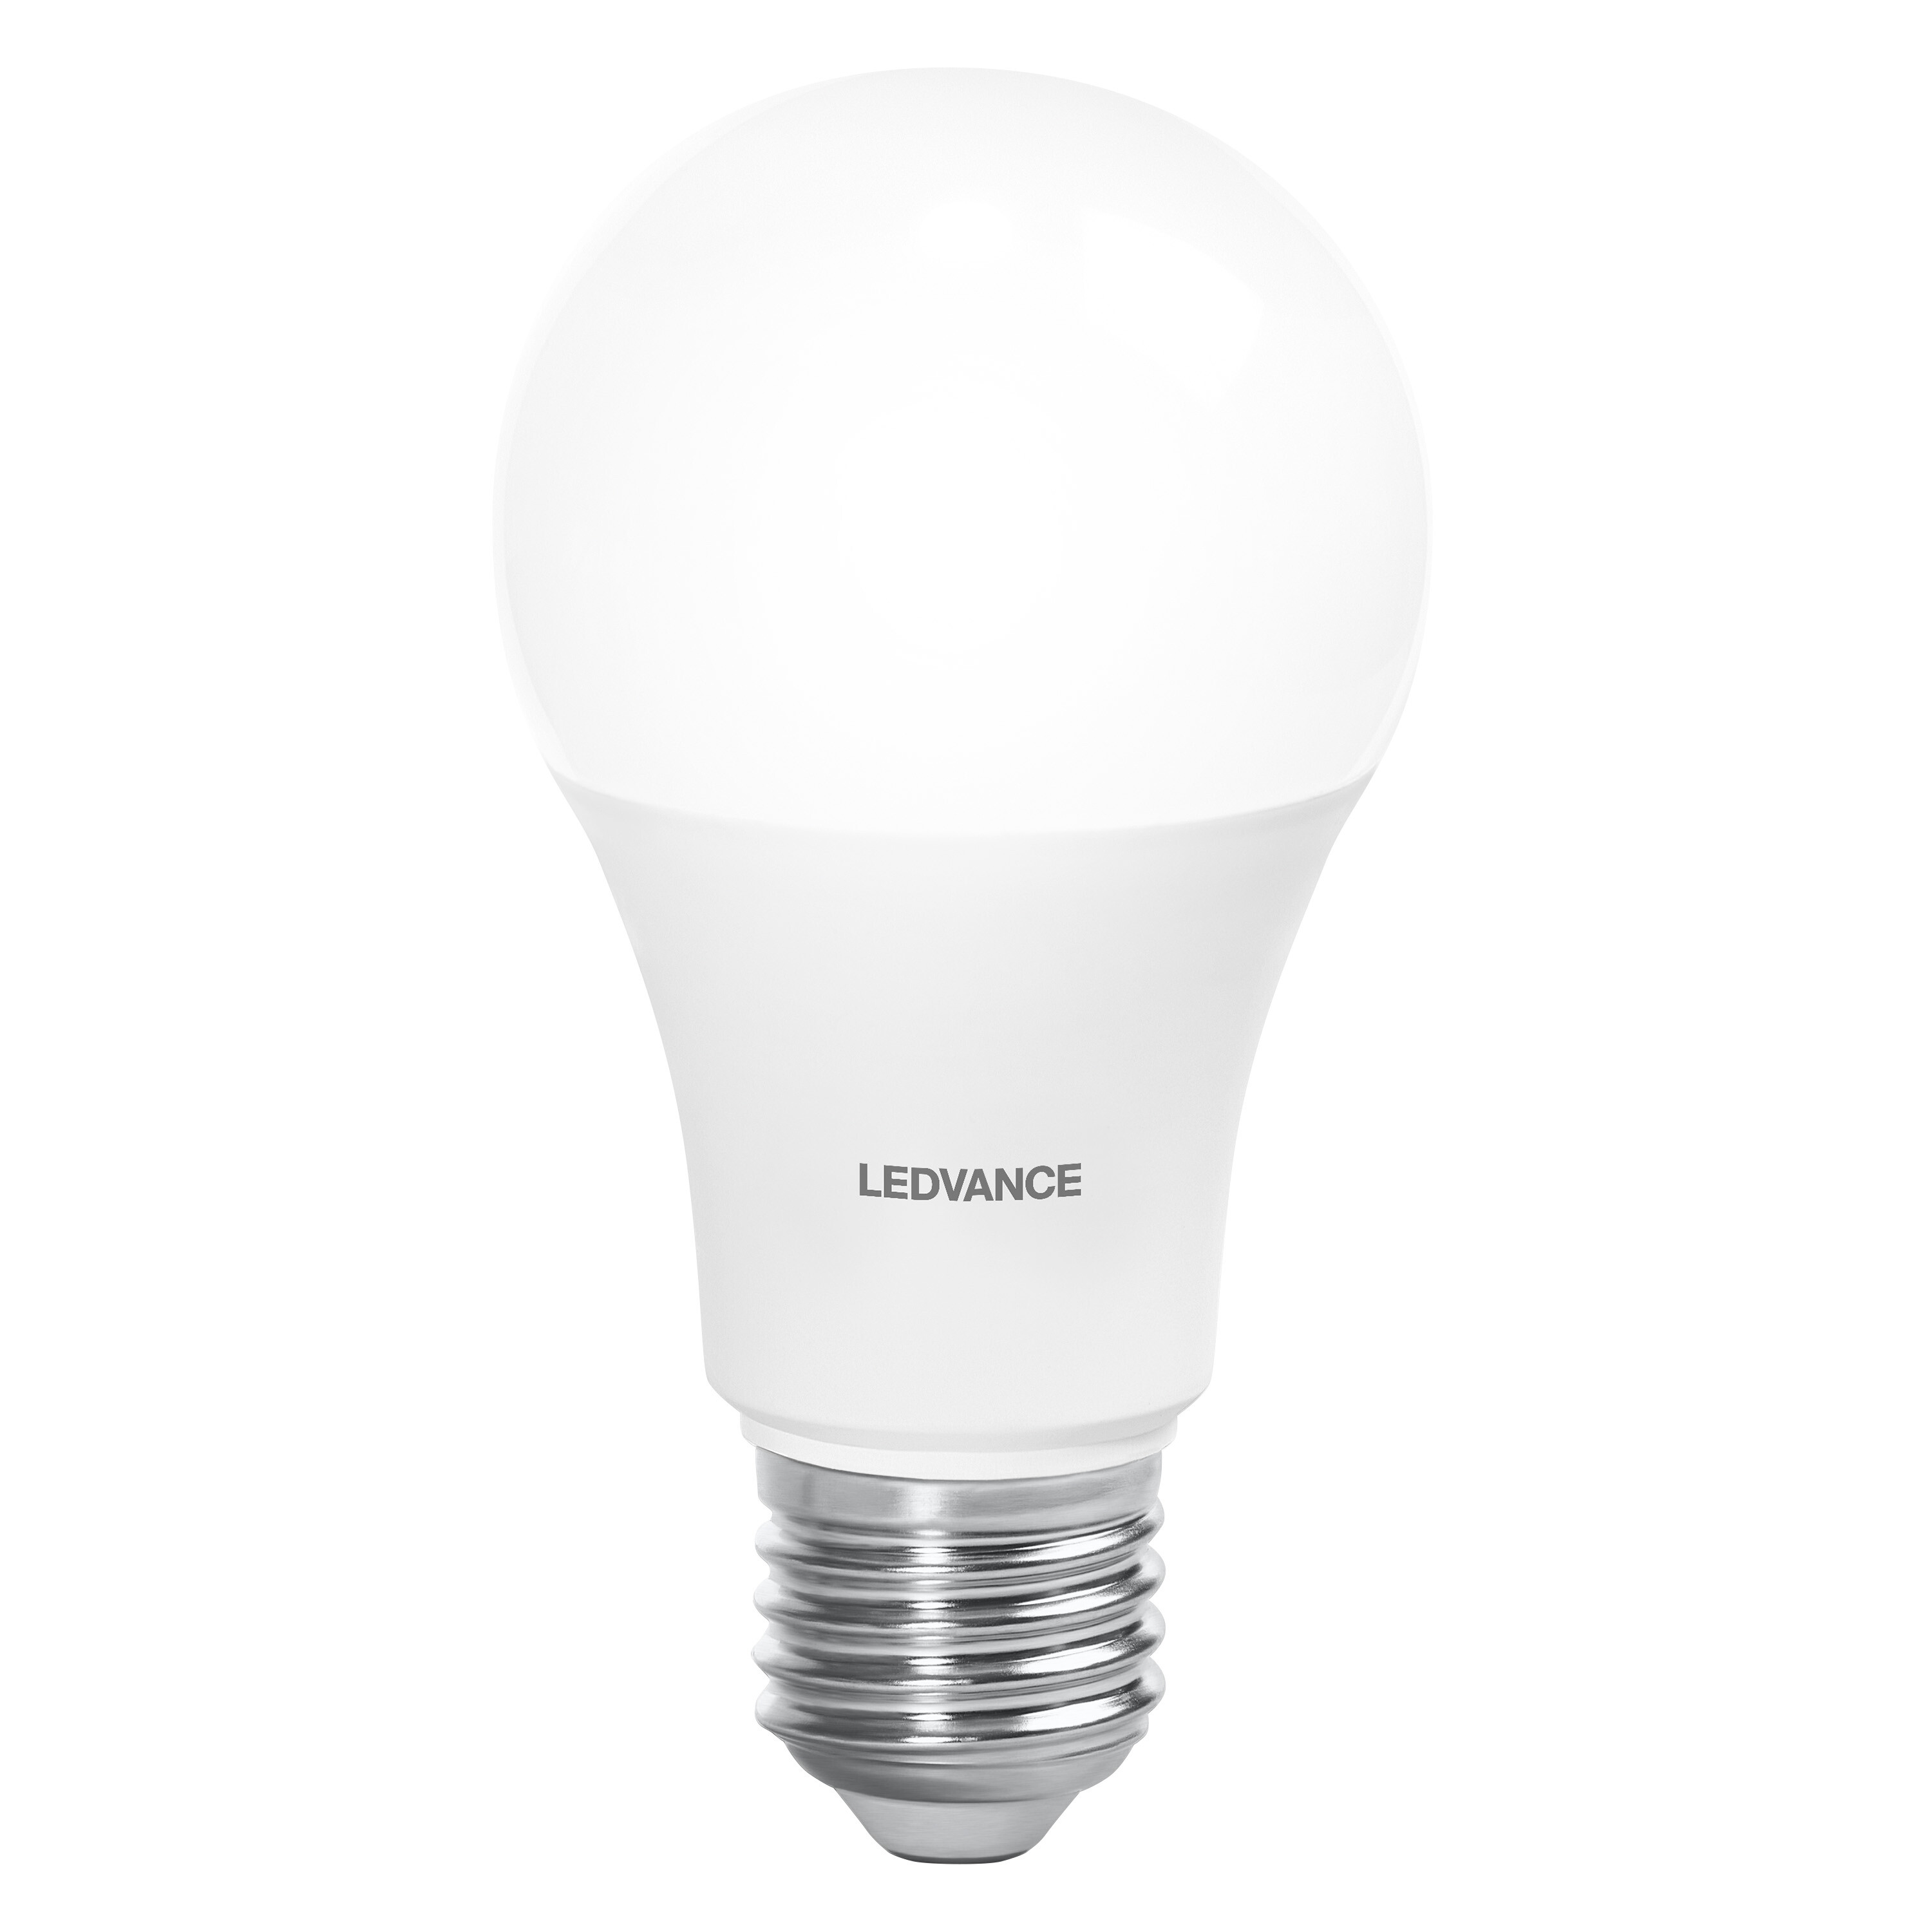 Lichfarbe lumen 750 LED LEDVANCE änderbar SunHome Lamps Lampe